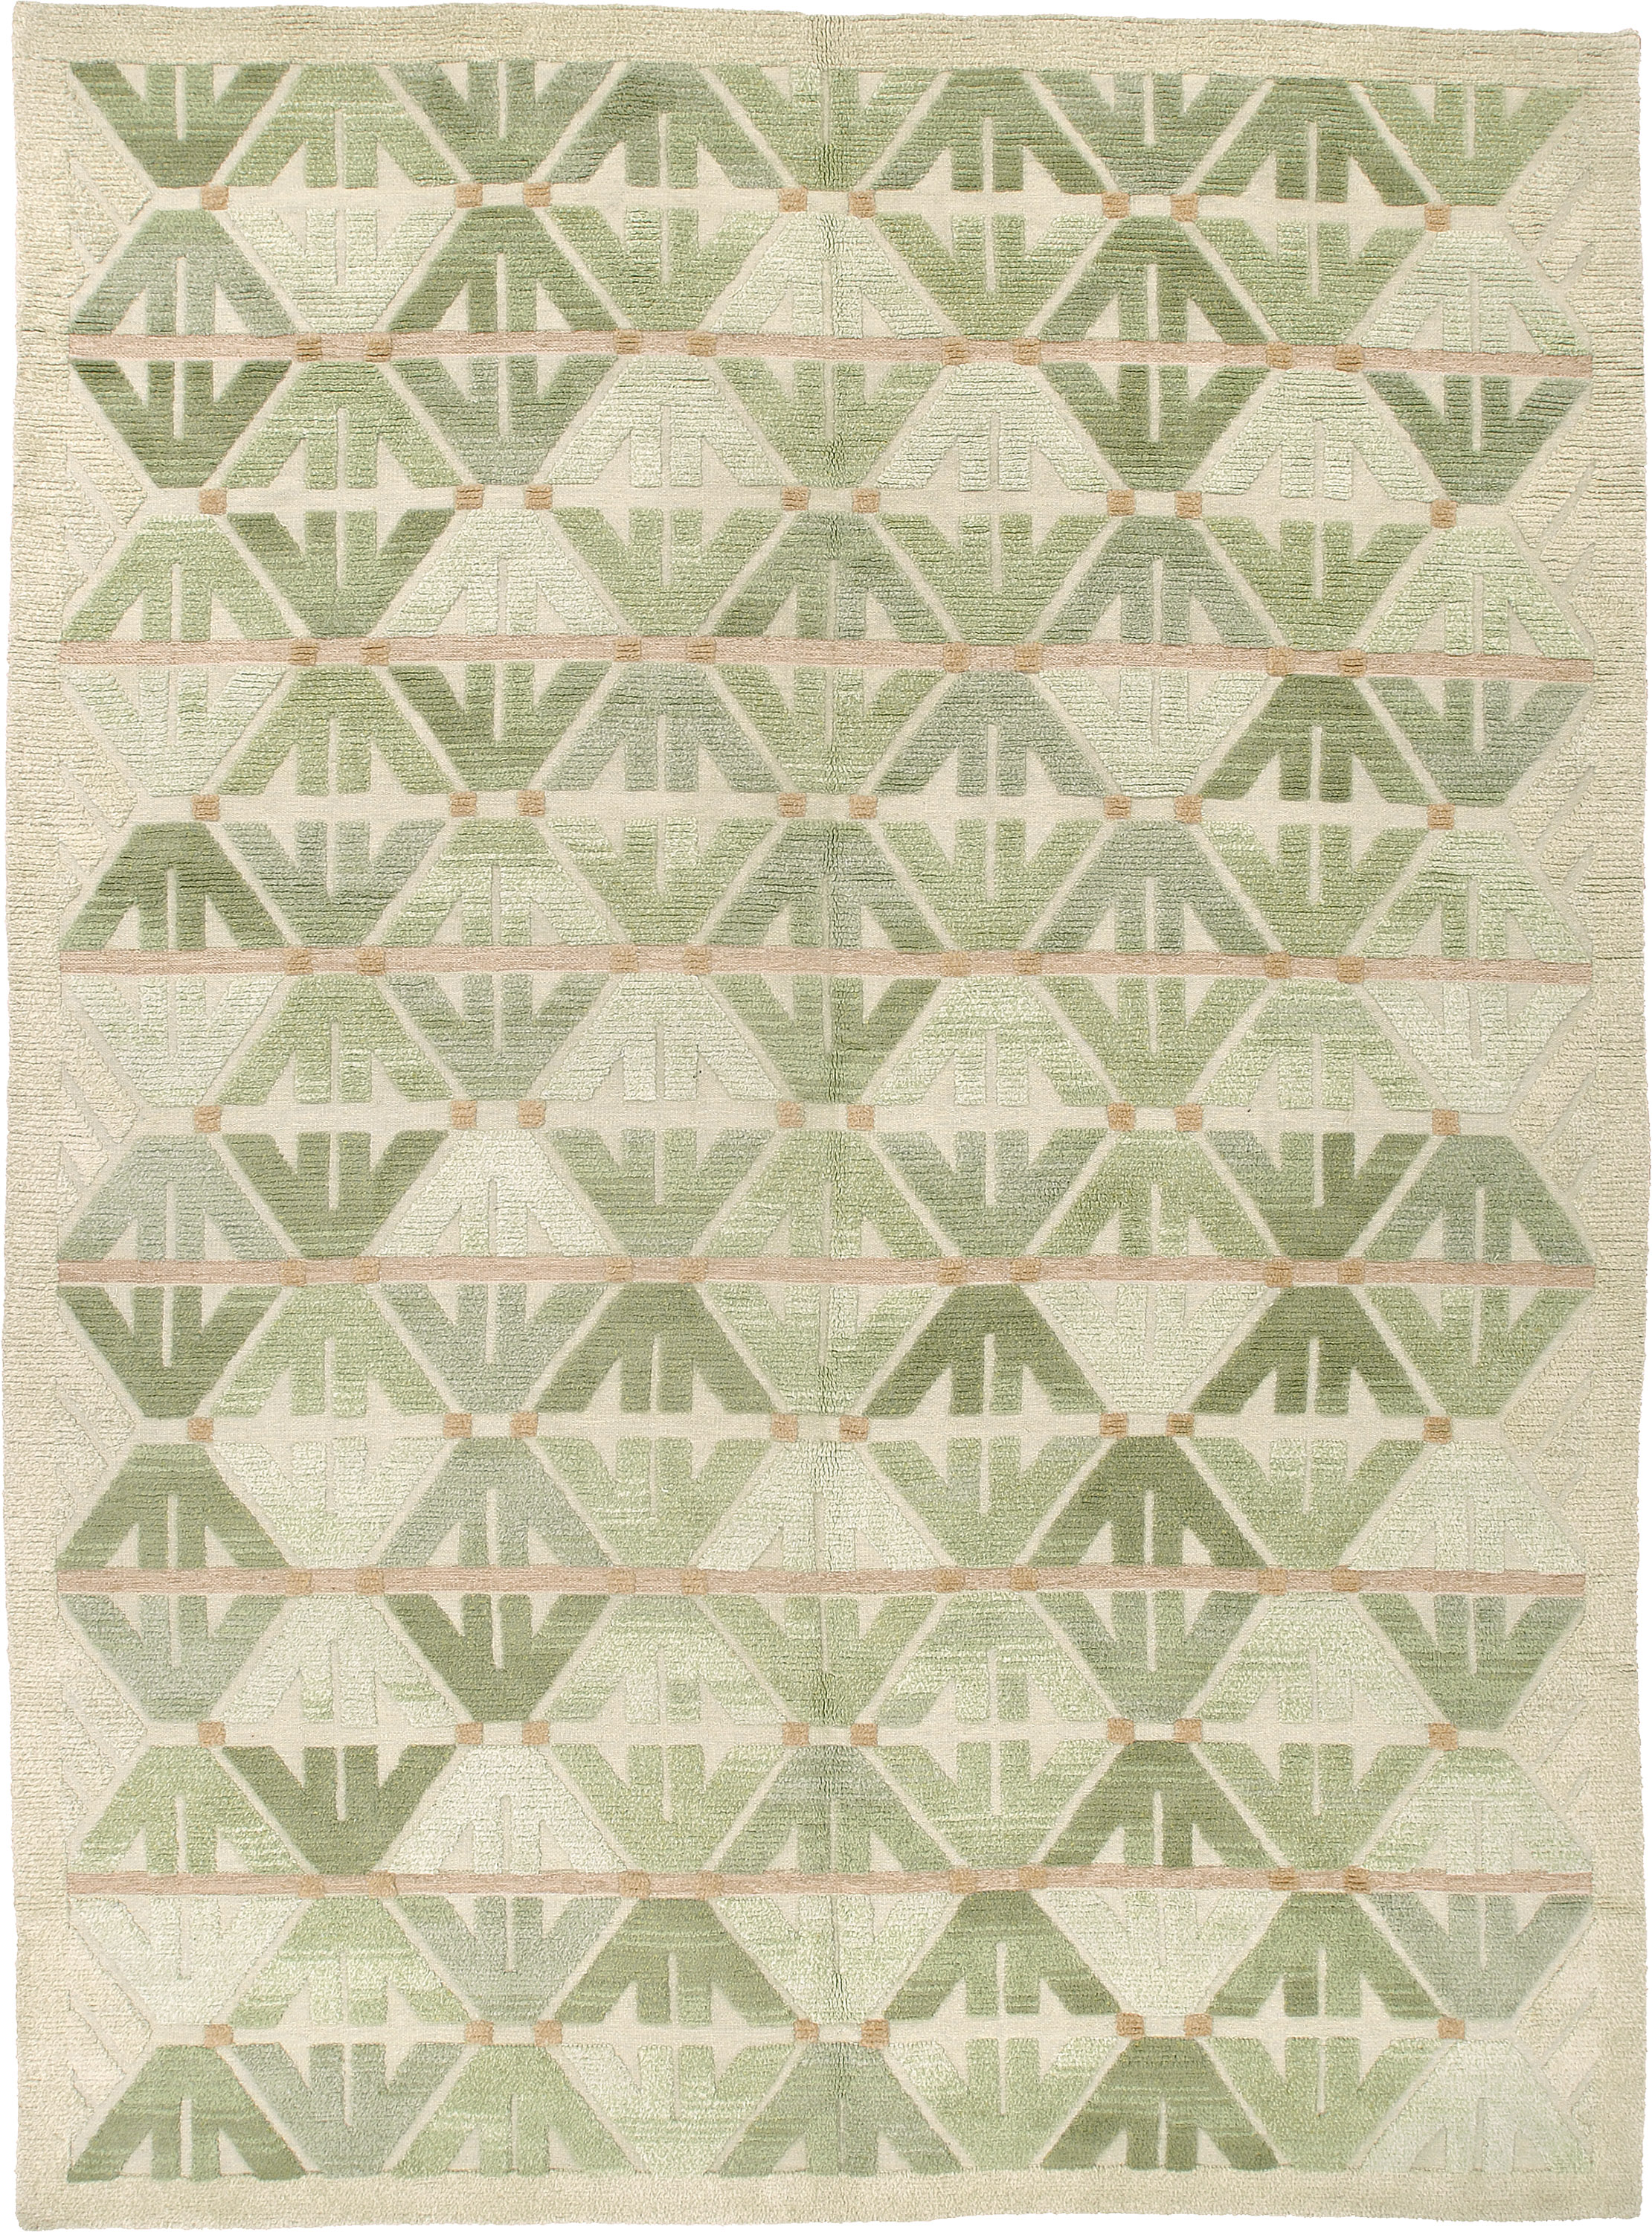 16862 Helix Design | Custom Swedish Inspired Design Carpet | FJ Hakimian | Carpet Gallery in NYC